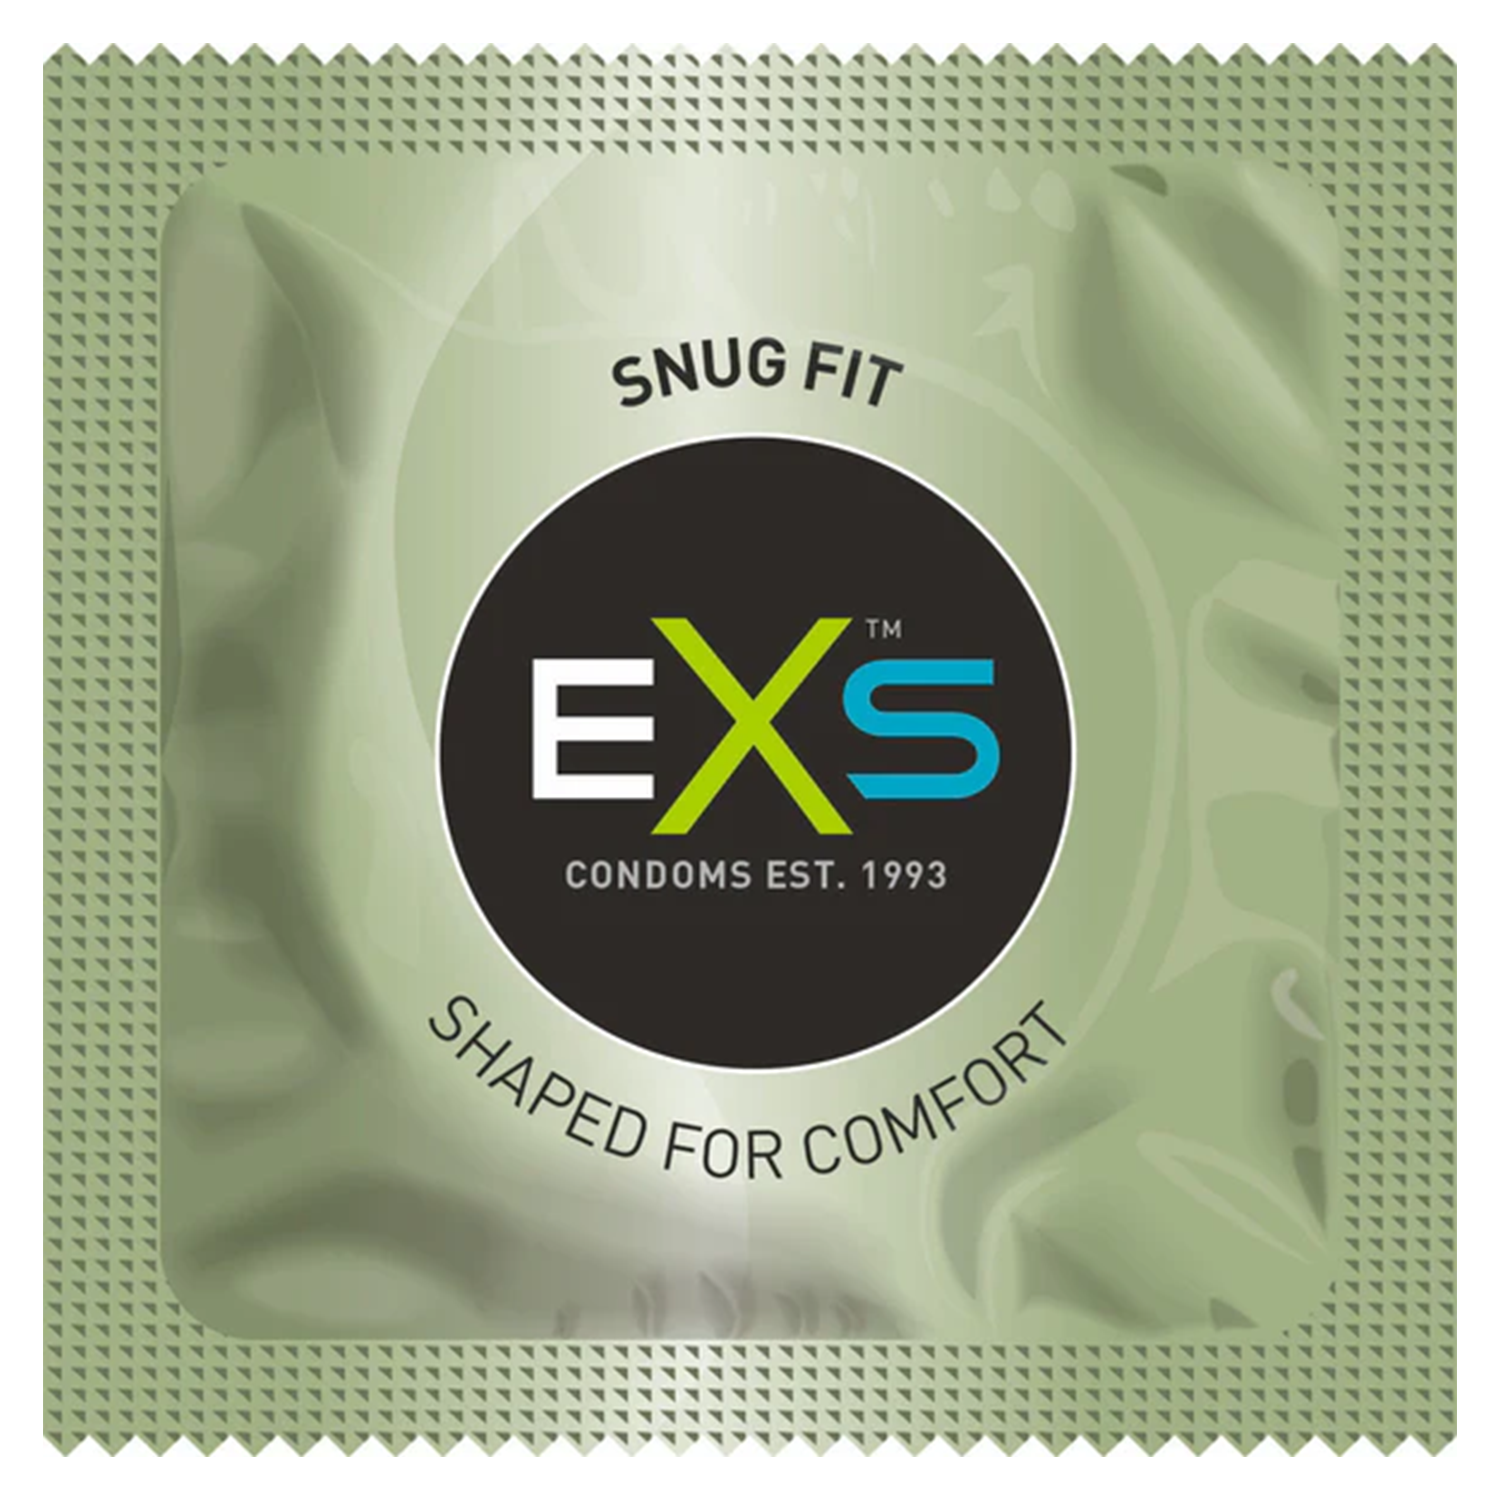 EXS Condoms | Snug Fit | Pack of 144